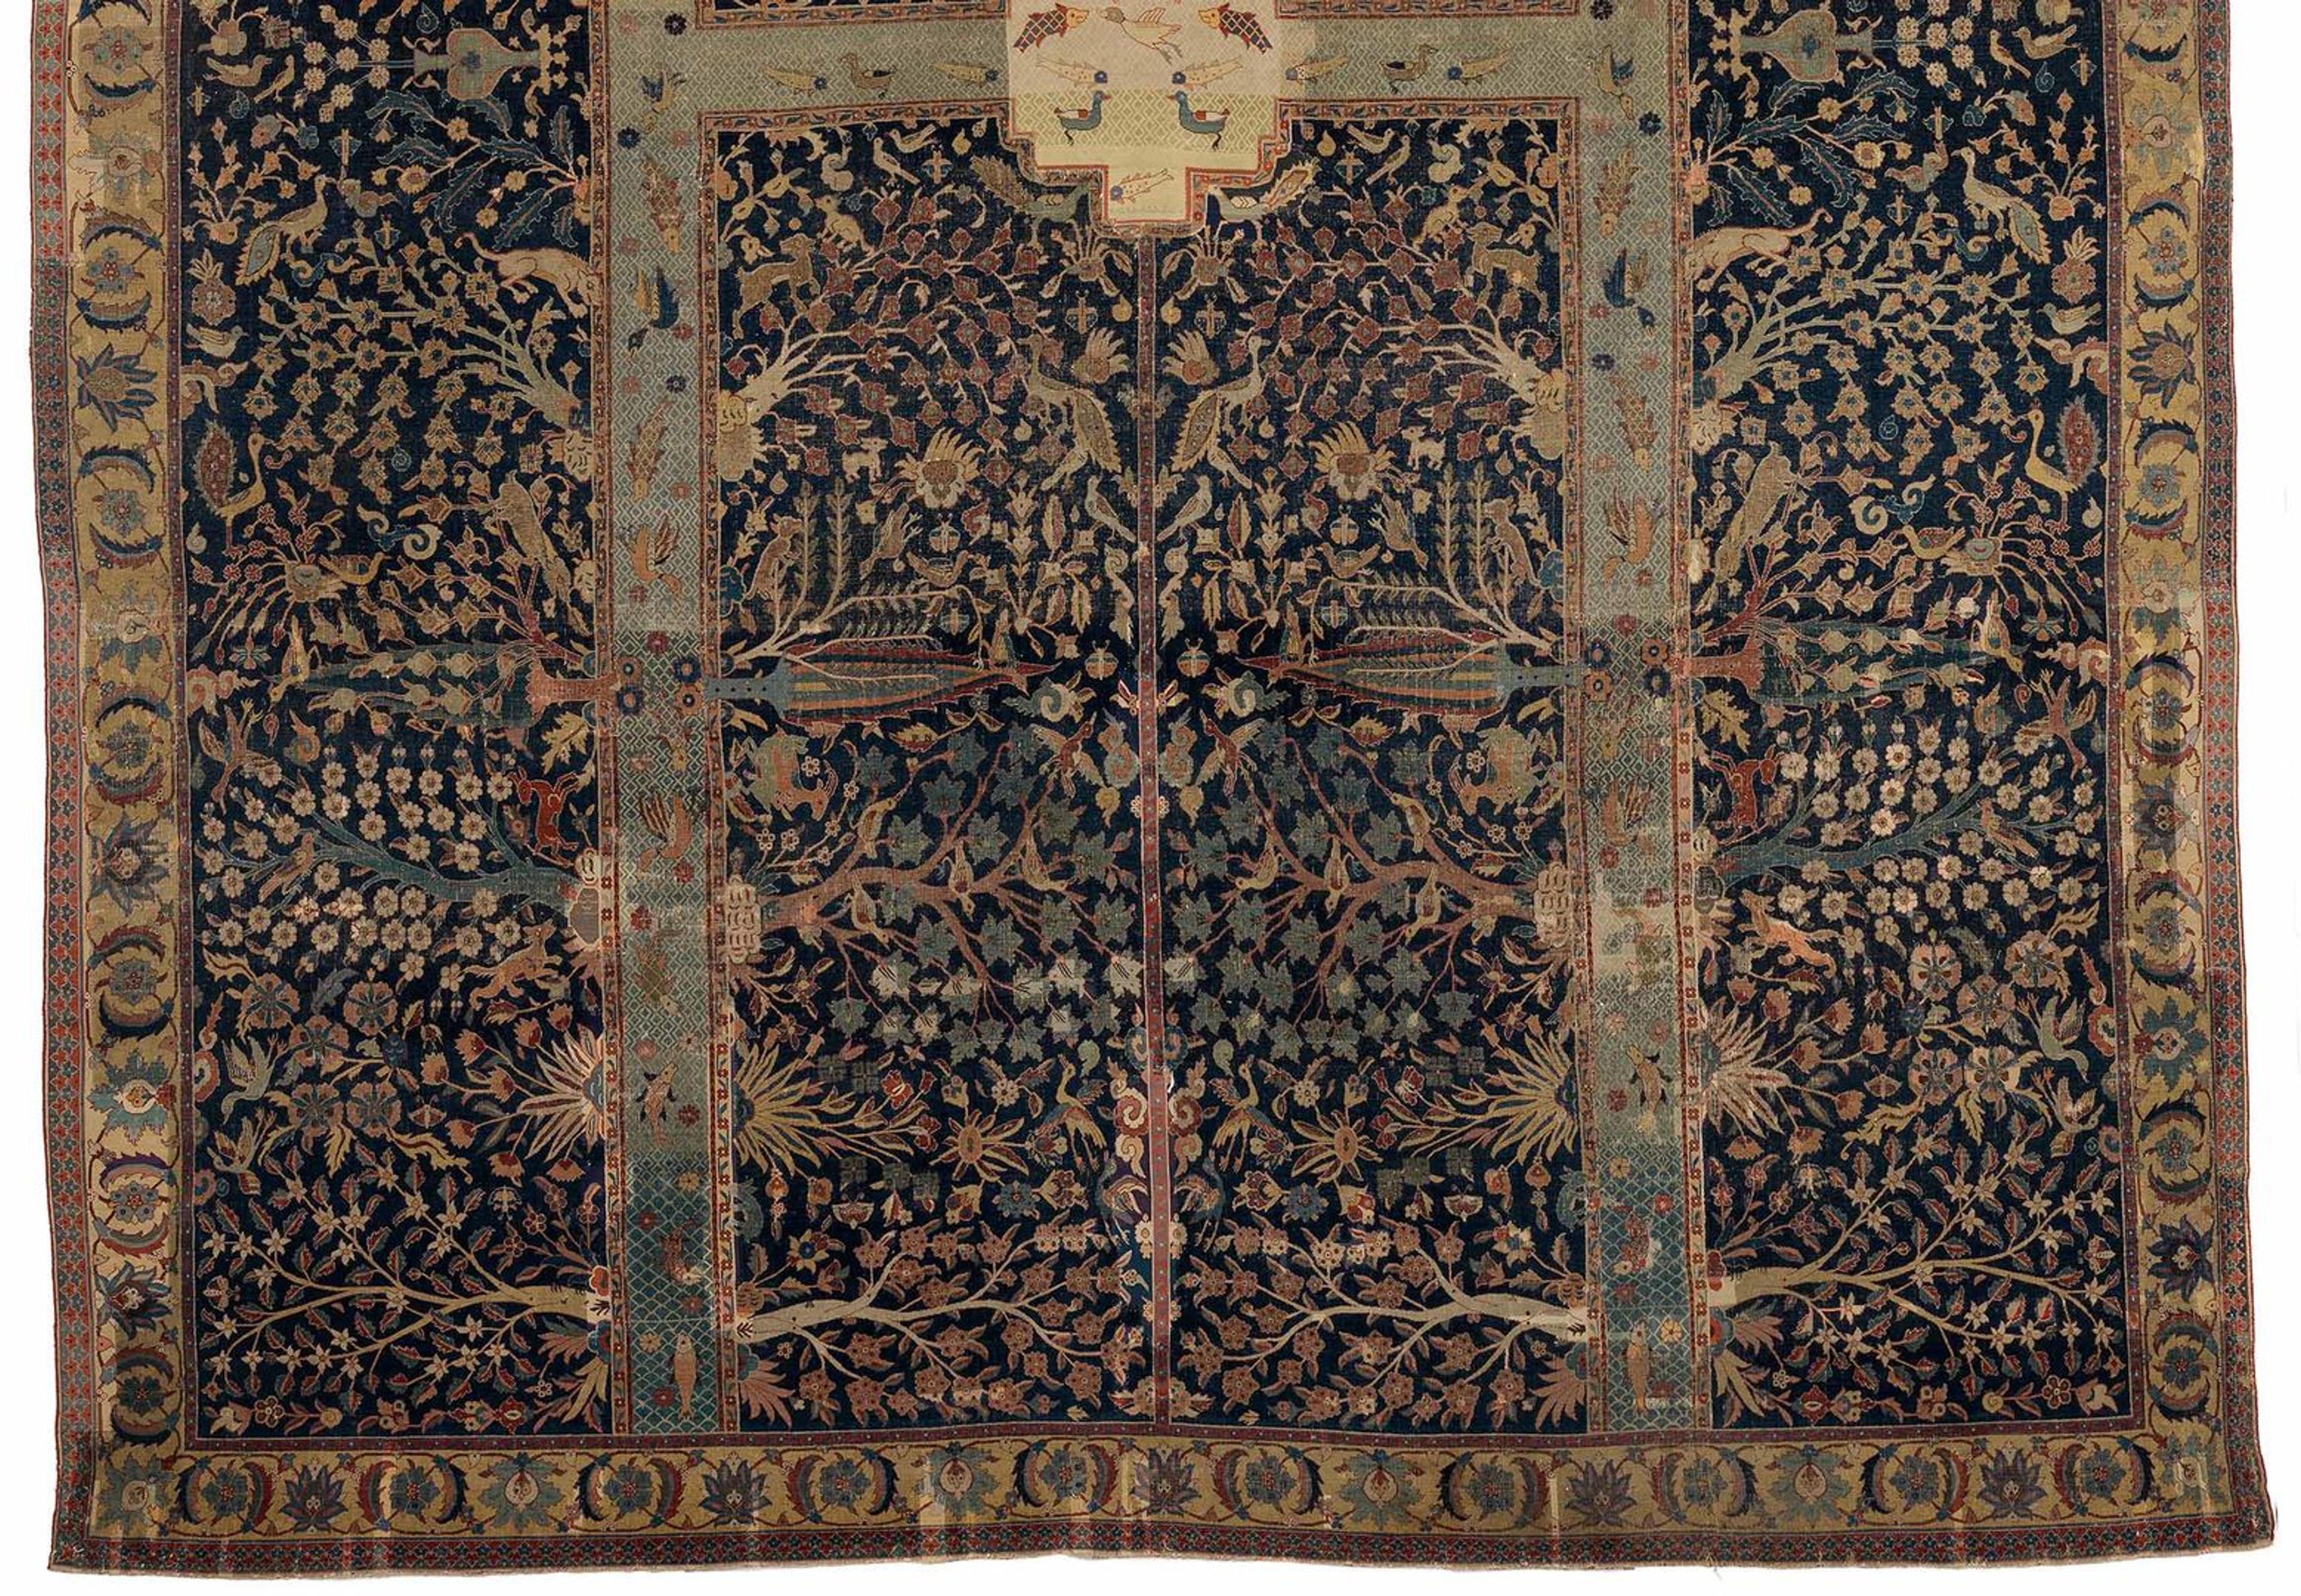 Lower half of Wagner carpet